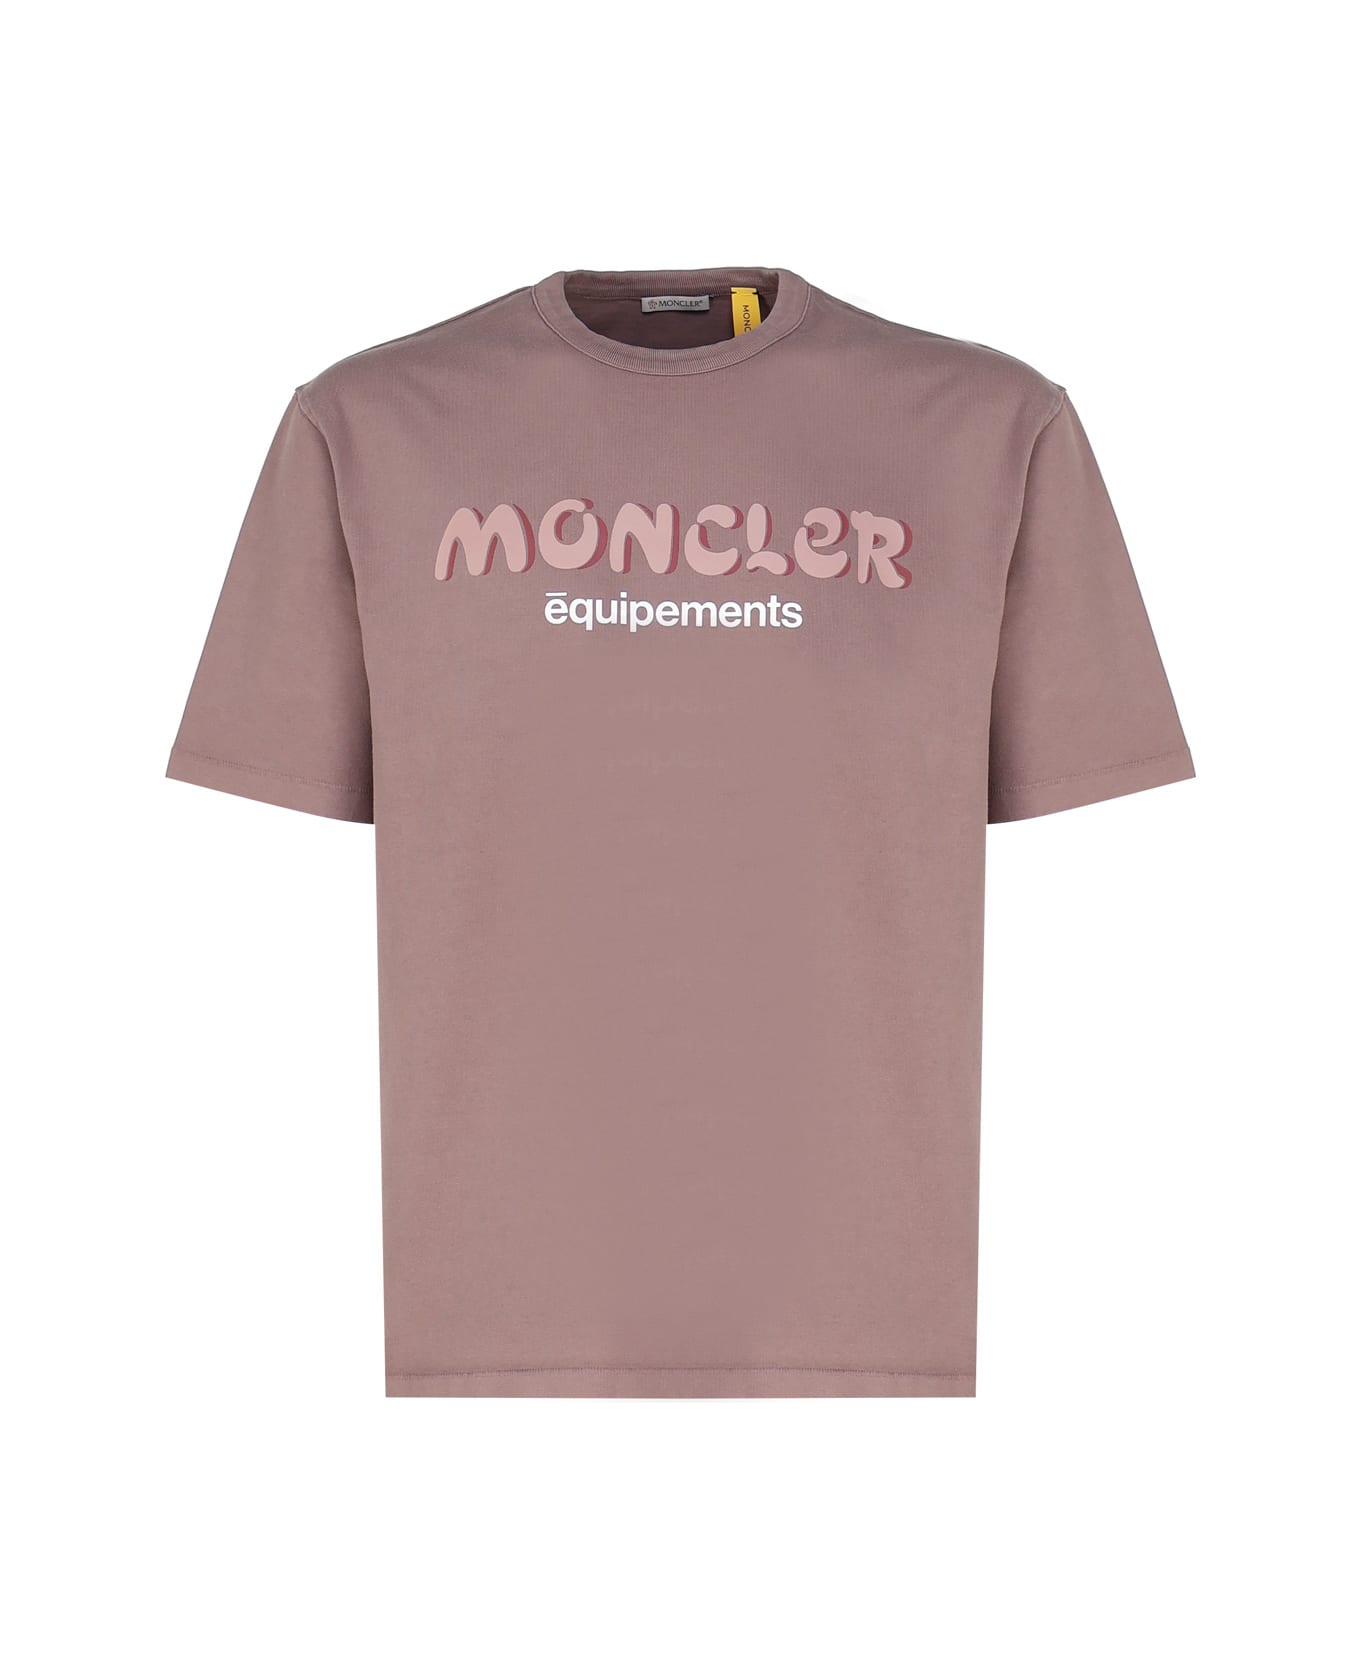 Moncler Genius Moncler X Salehe Bembury T-shirt - Dusty pink